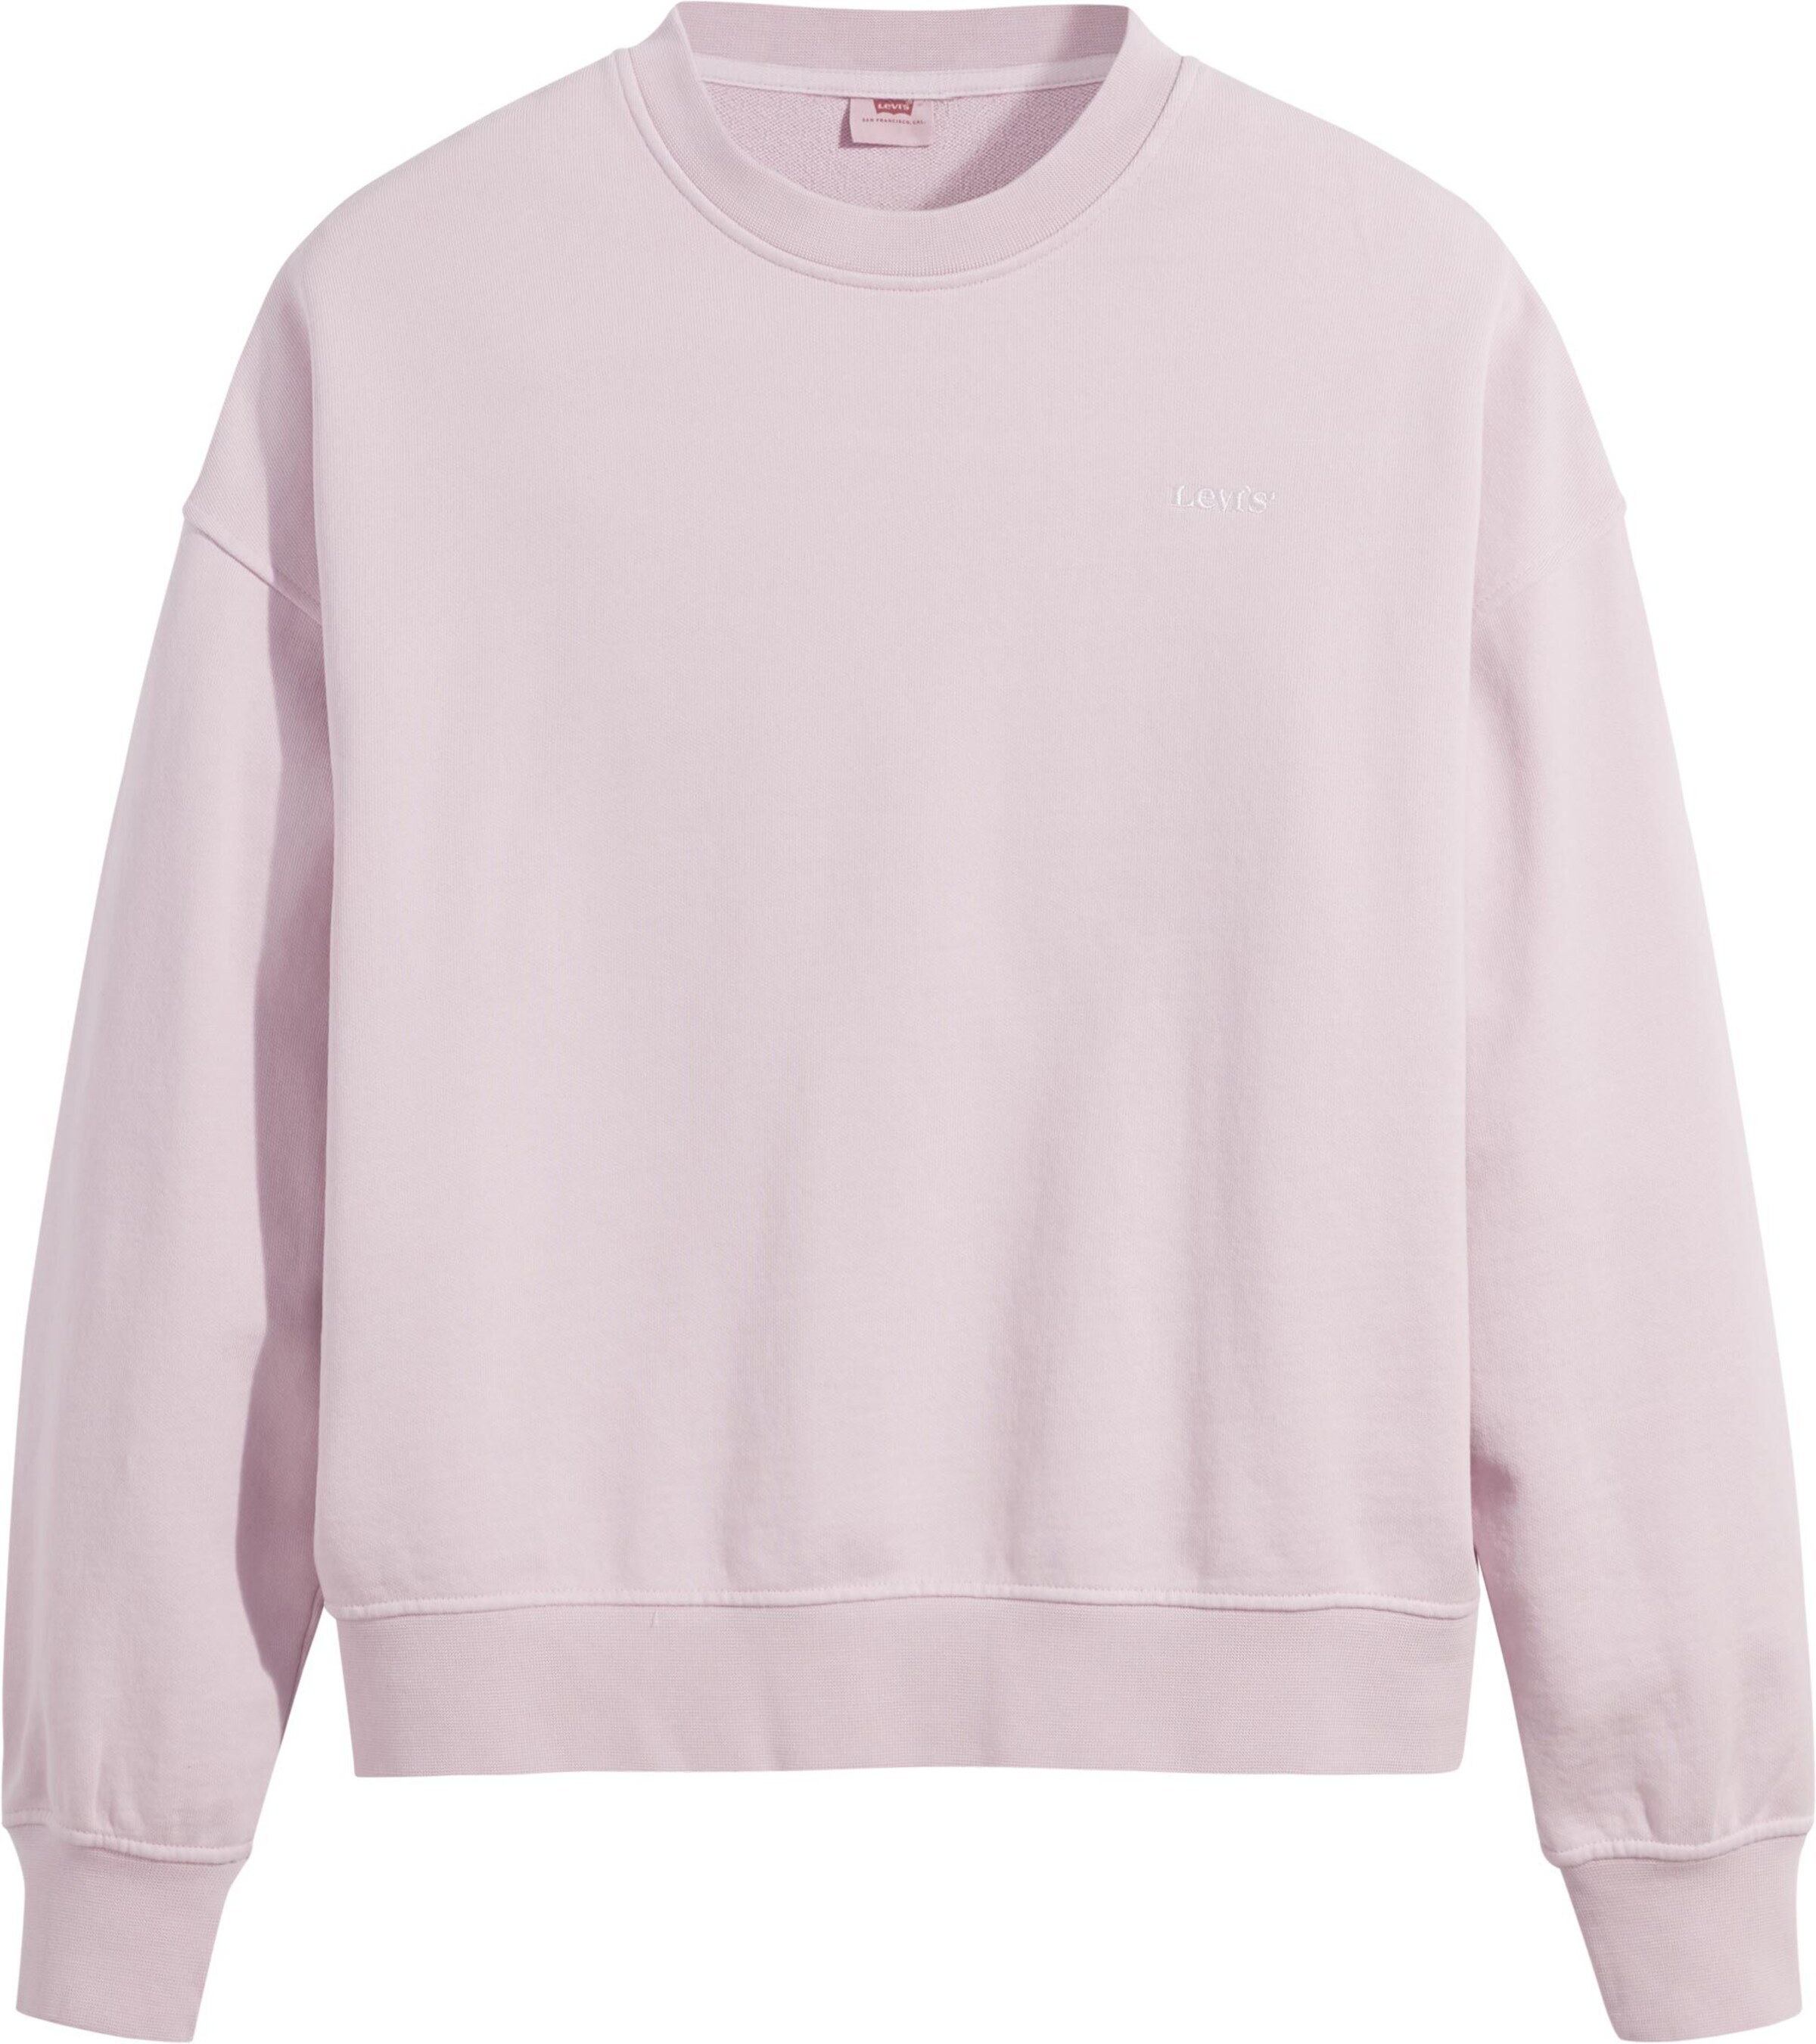 LEVIS Sweatshirt Standard in Pastelllila 